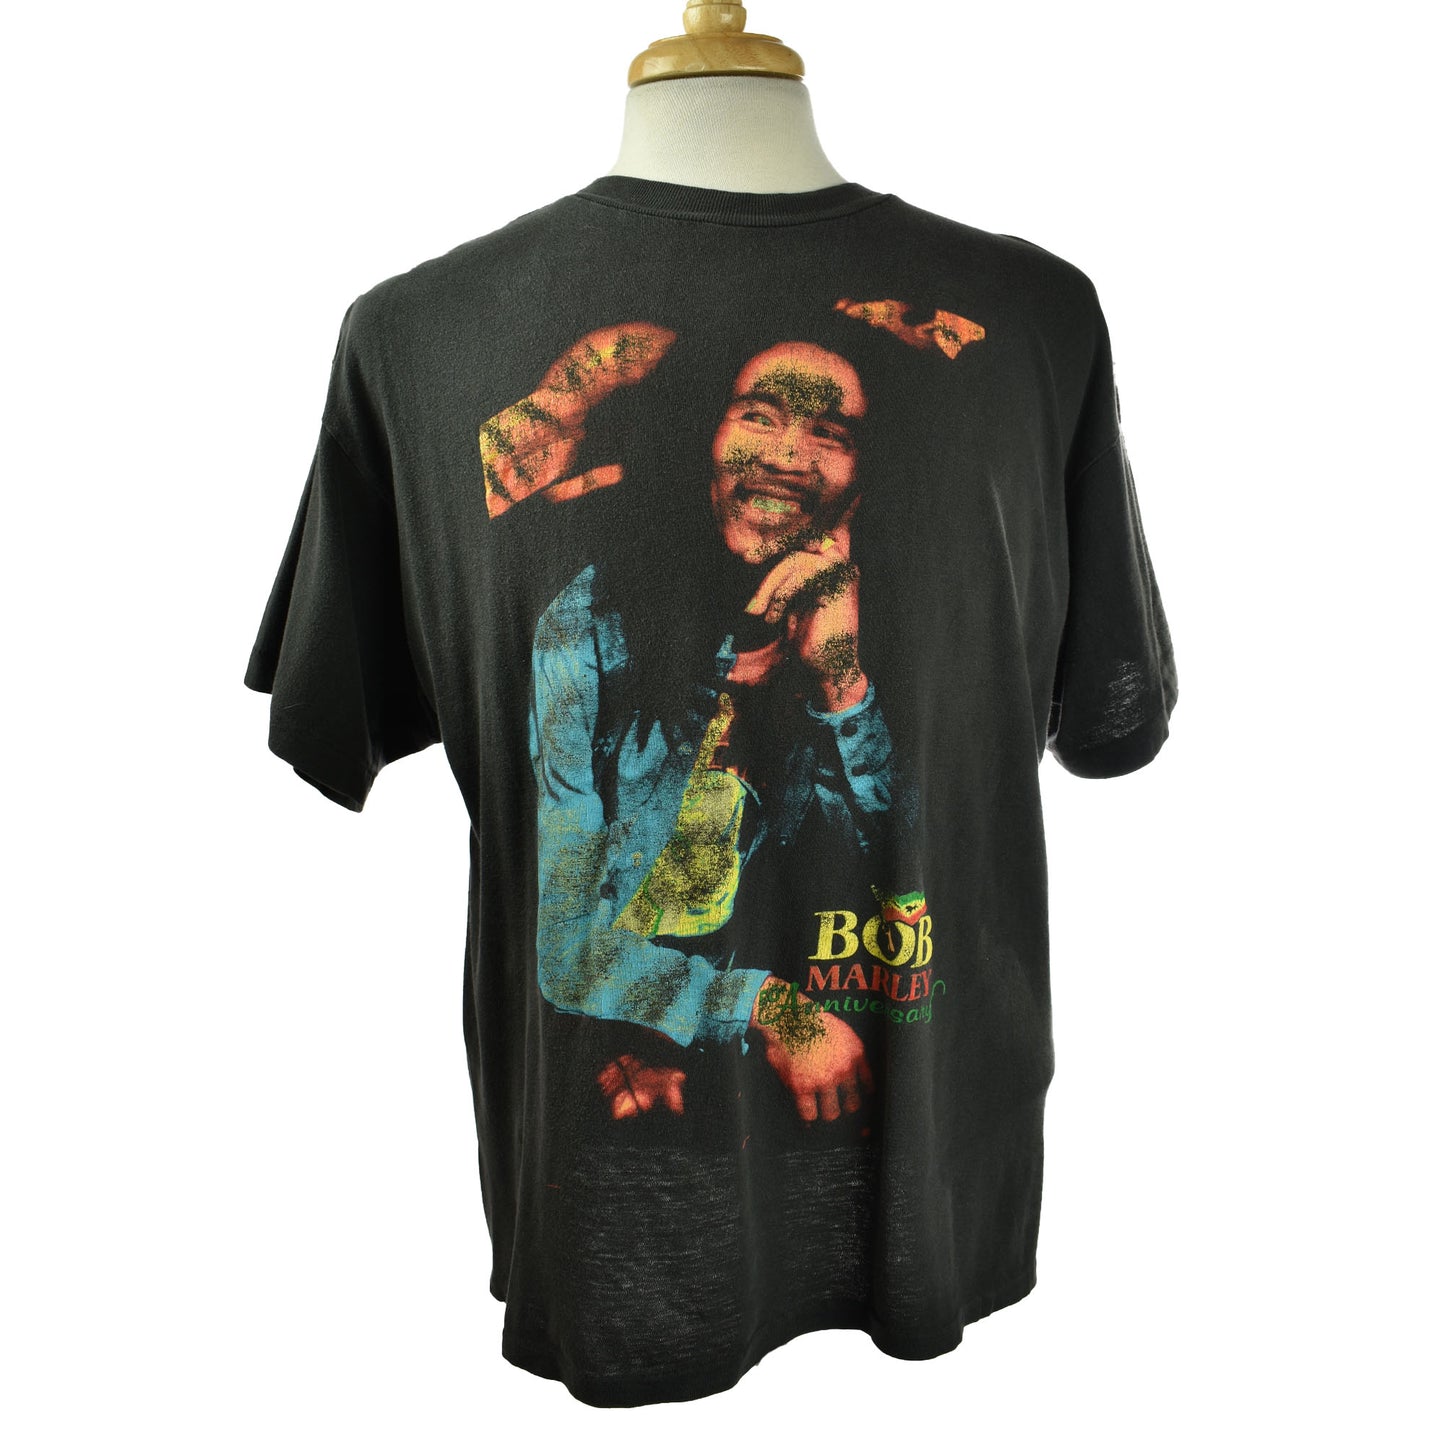 Vintage 1995 Single Stitch Bob Marley 50th Anniversary Tee